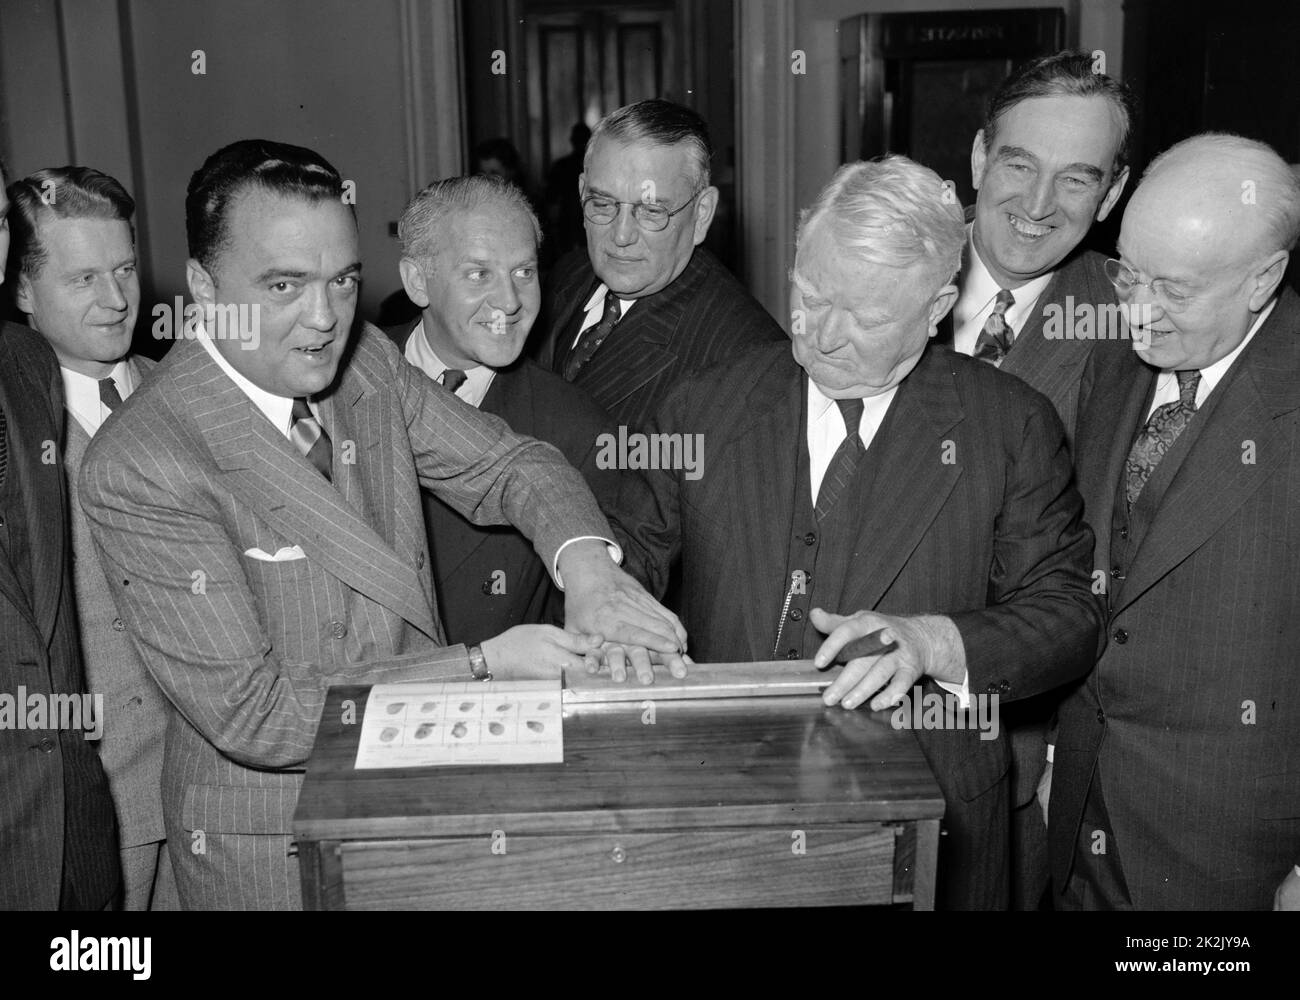 1939 , J. Edgar Hoover, Vizepräsident für Fingerabdrücke, John N. Garner. J. Edgar. Hoover 1895-1972. Direktor des FBI (Federal Bureau of Investigation), von 1924-1972. Stockfoto